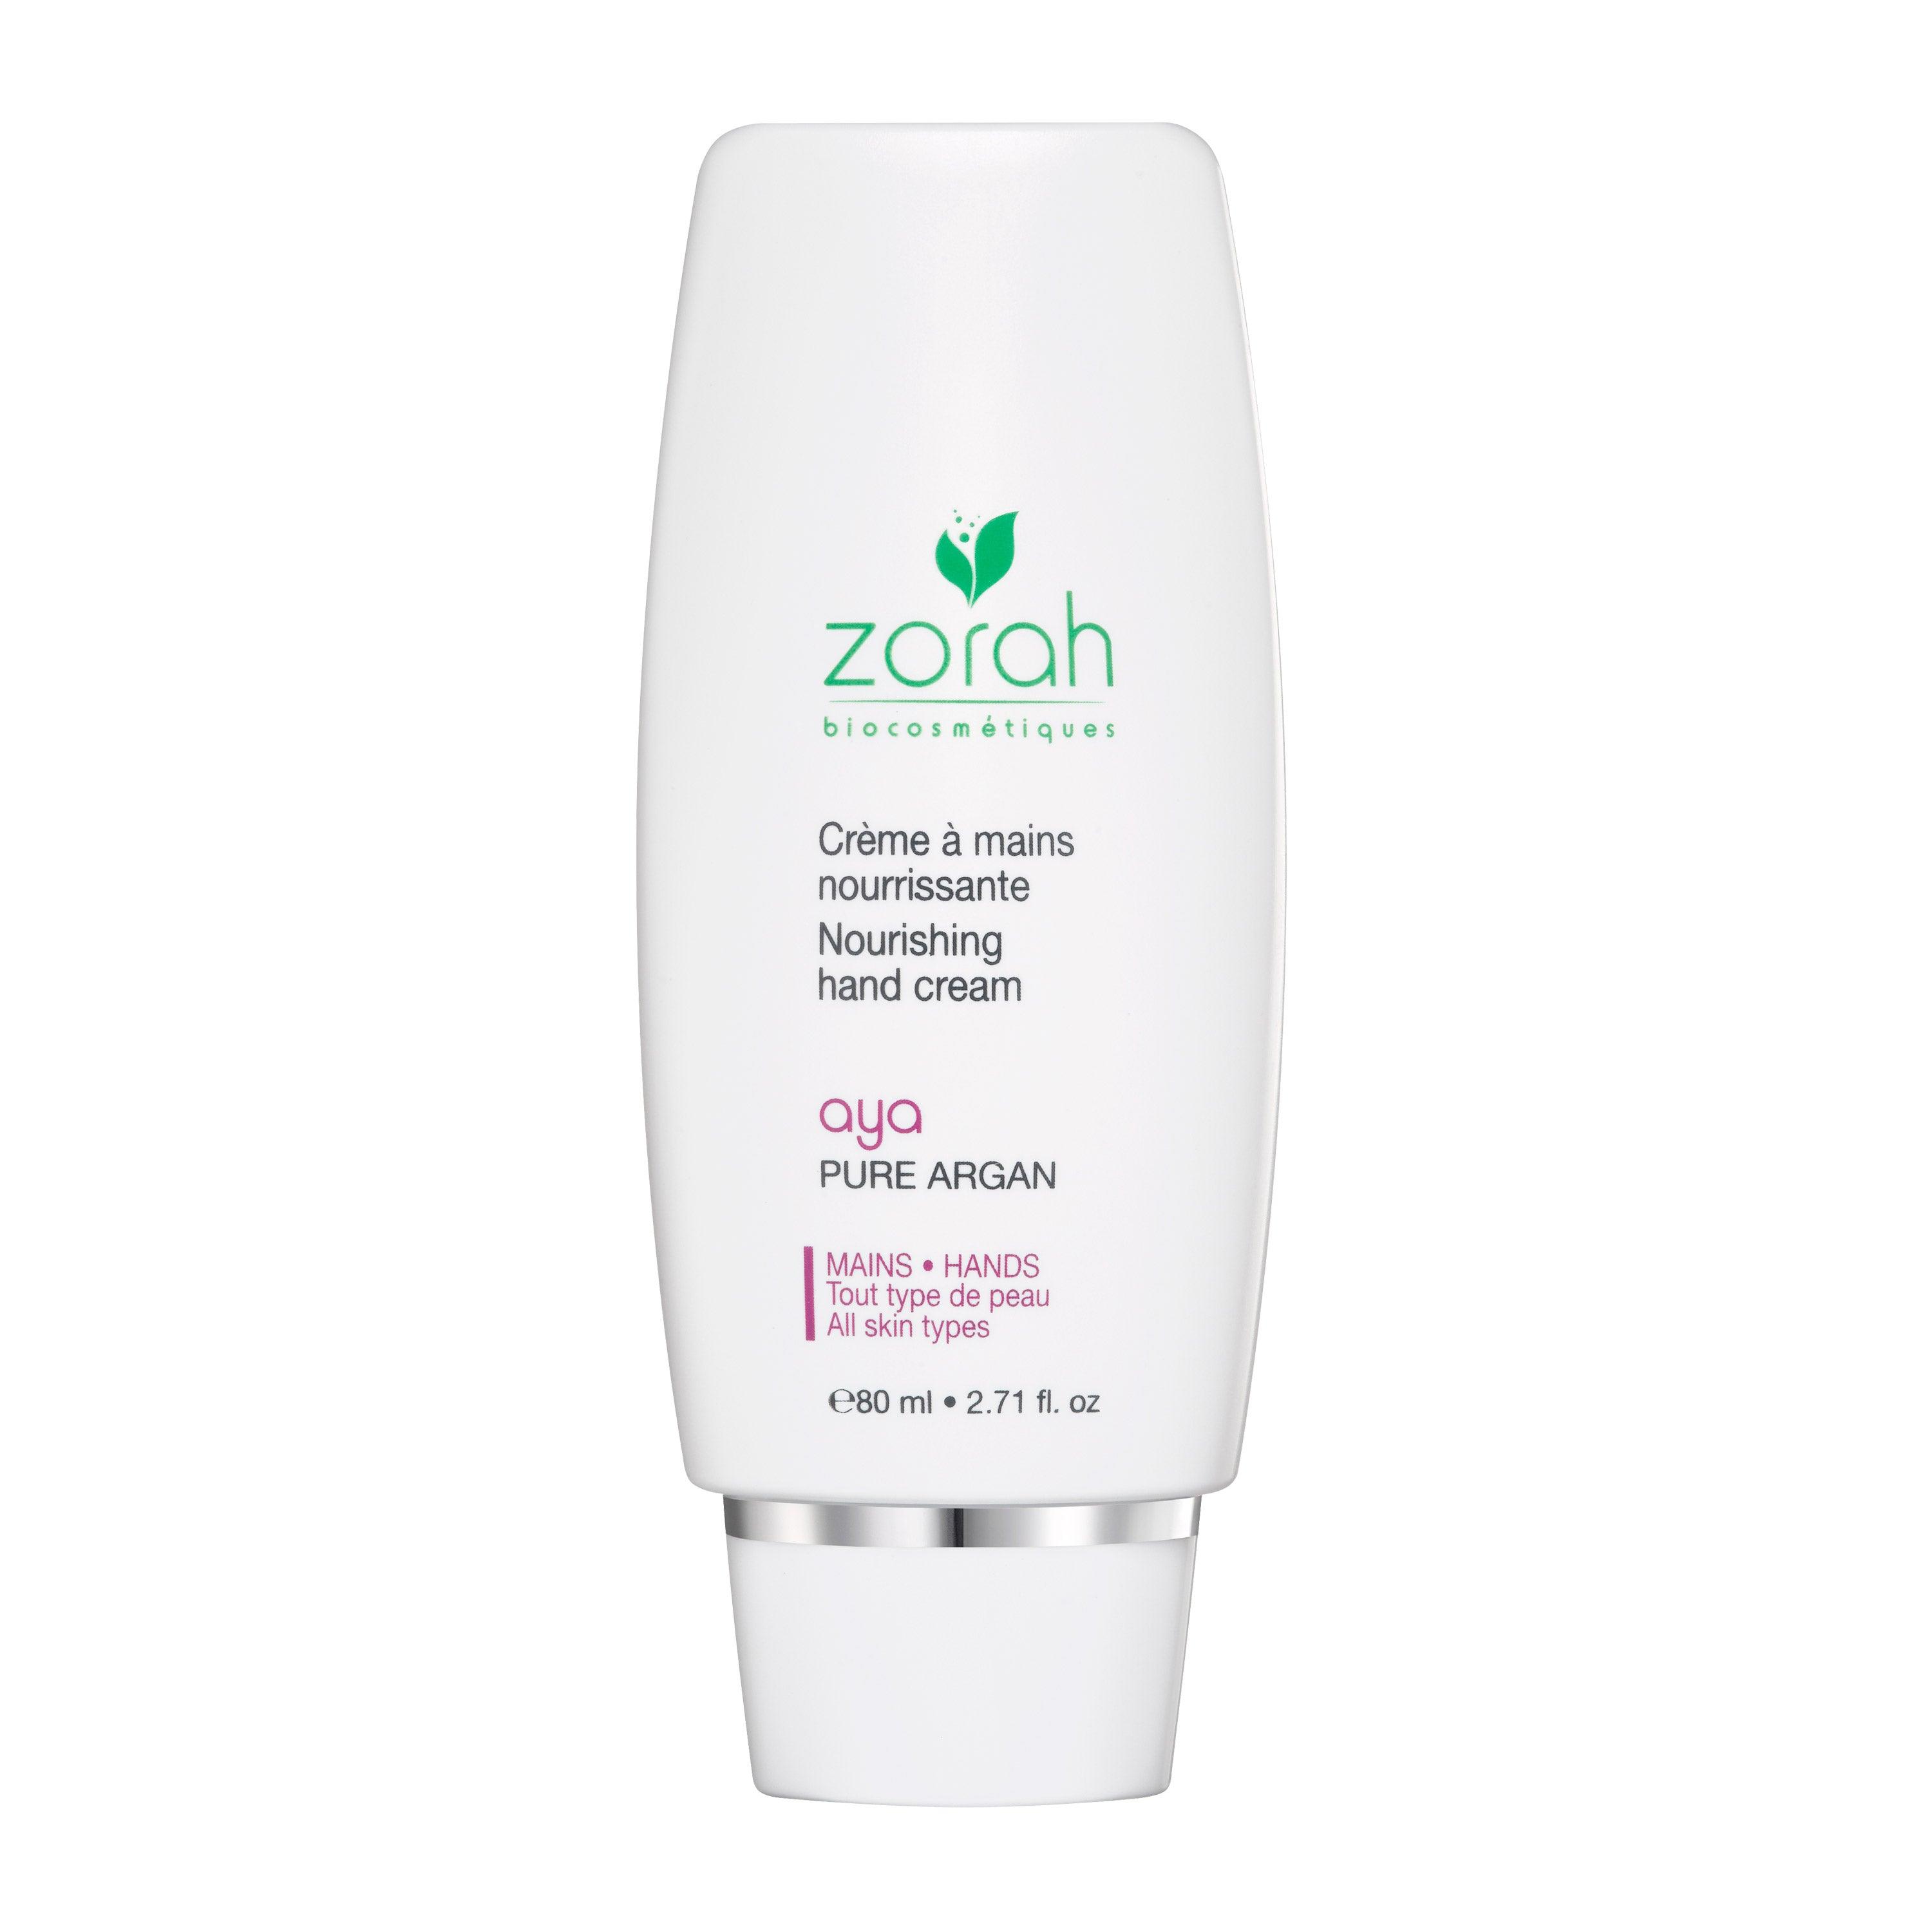 aya | Nourishing hand cream - Zorah biocosmétiques